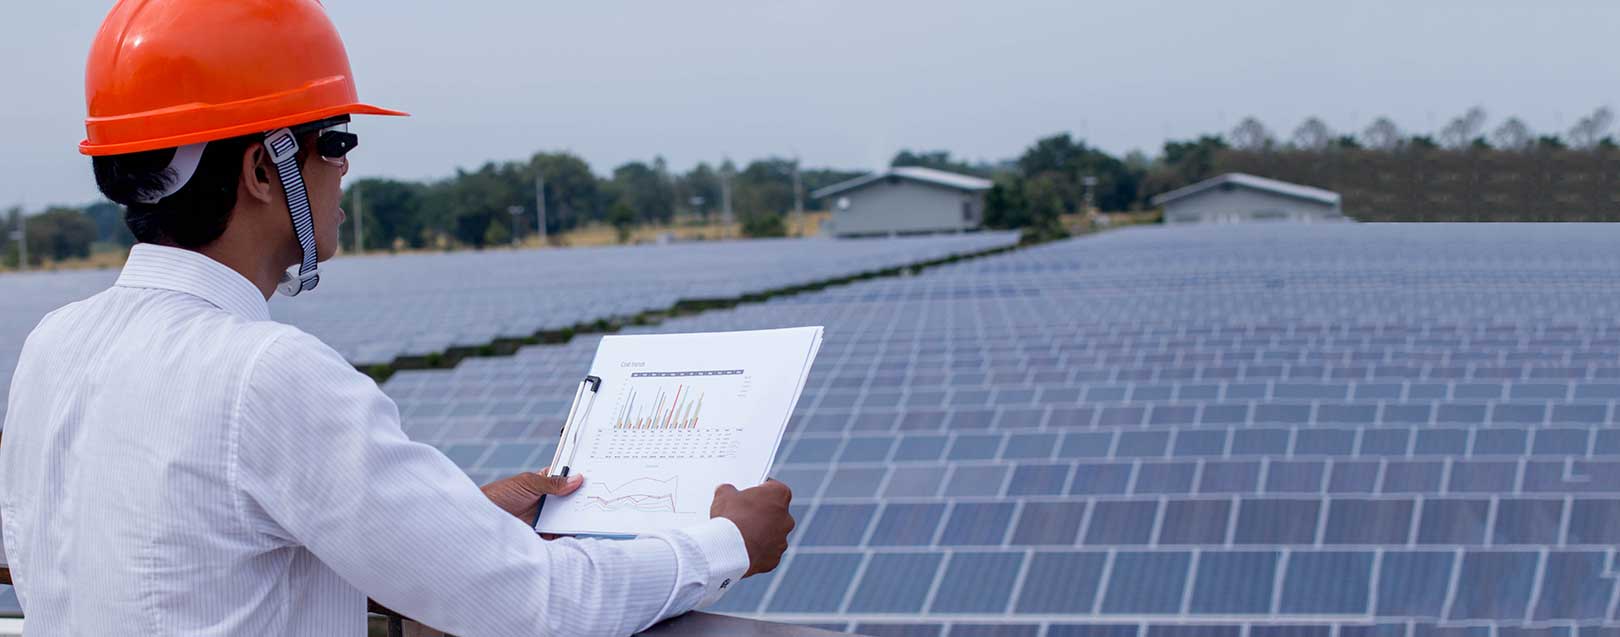 Adani to build $300 million worth solar plants in Australia